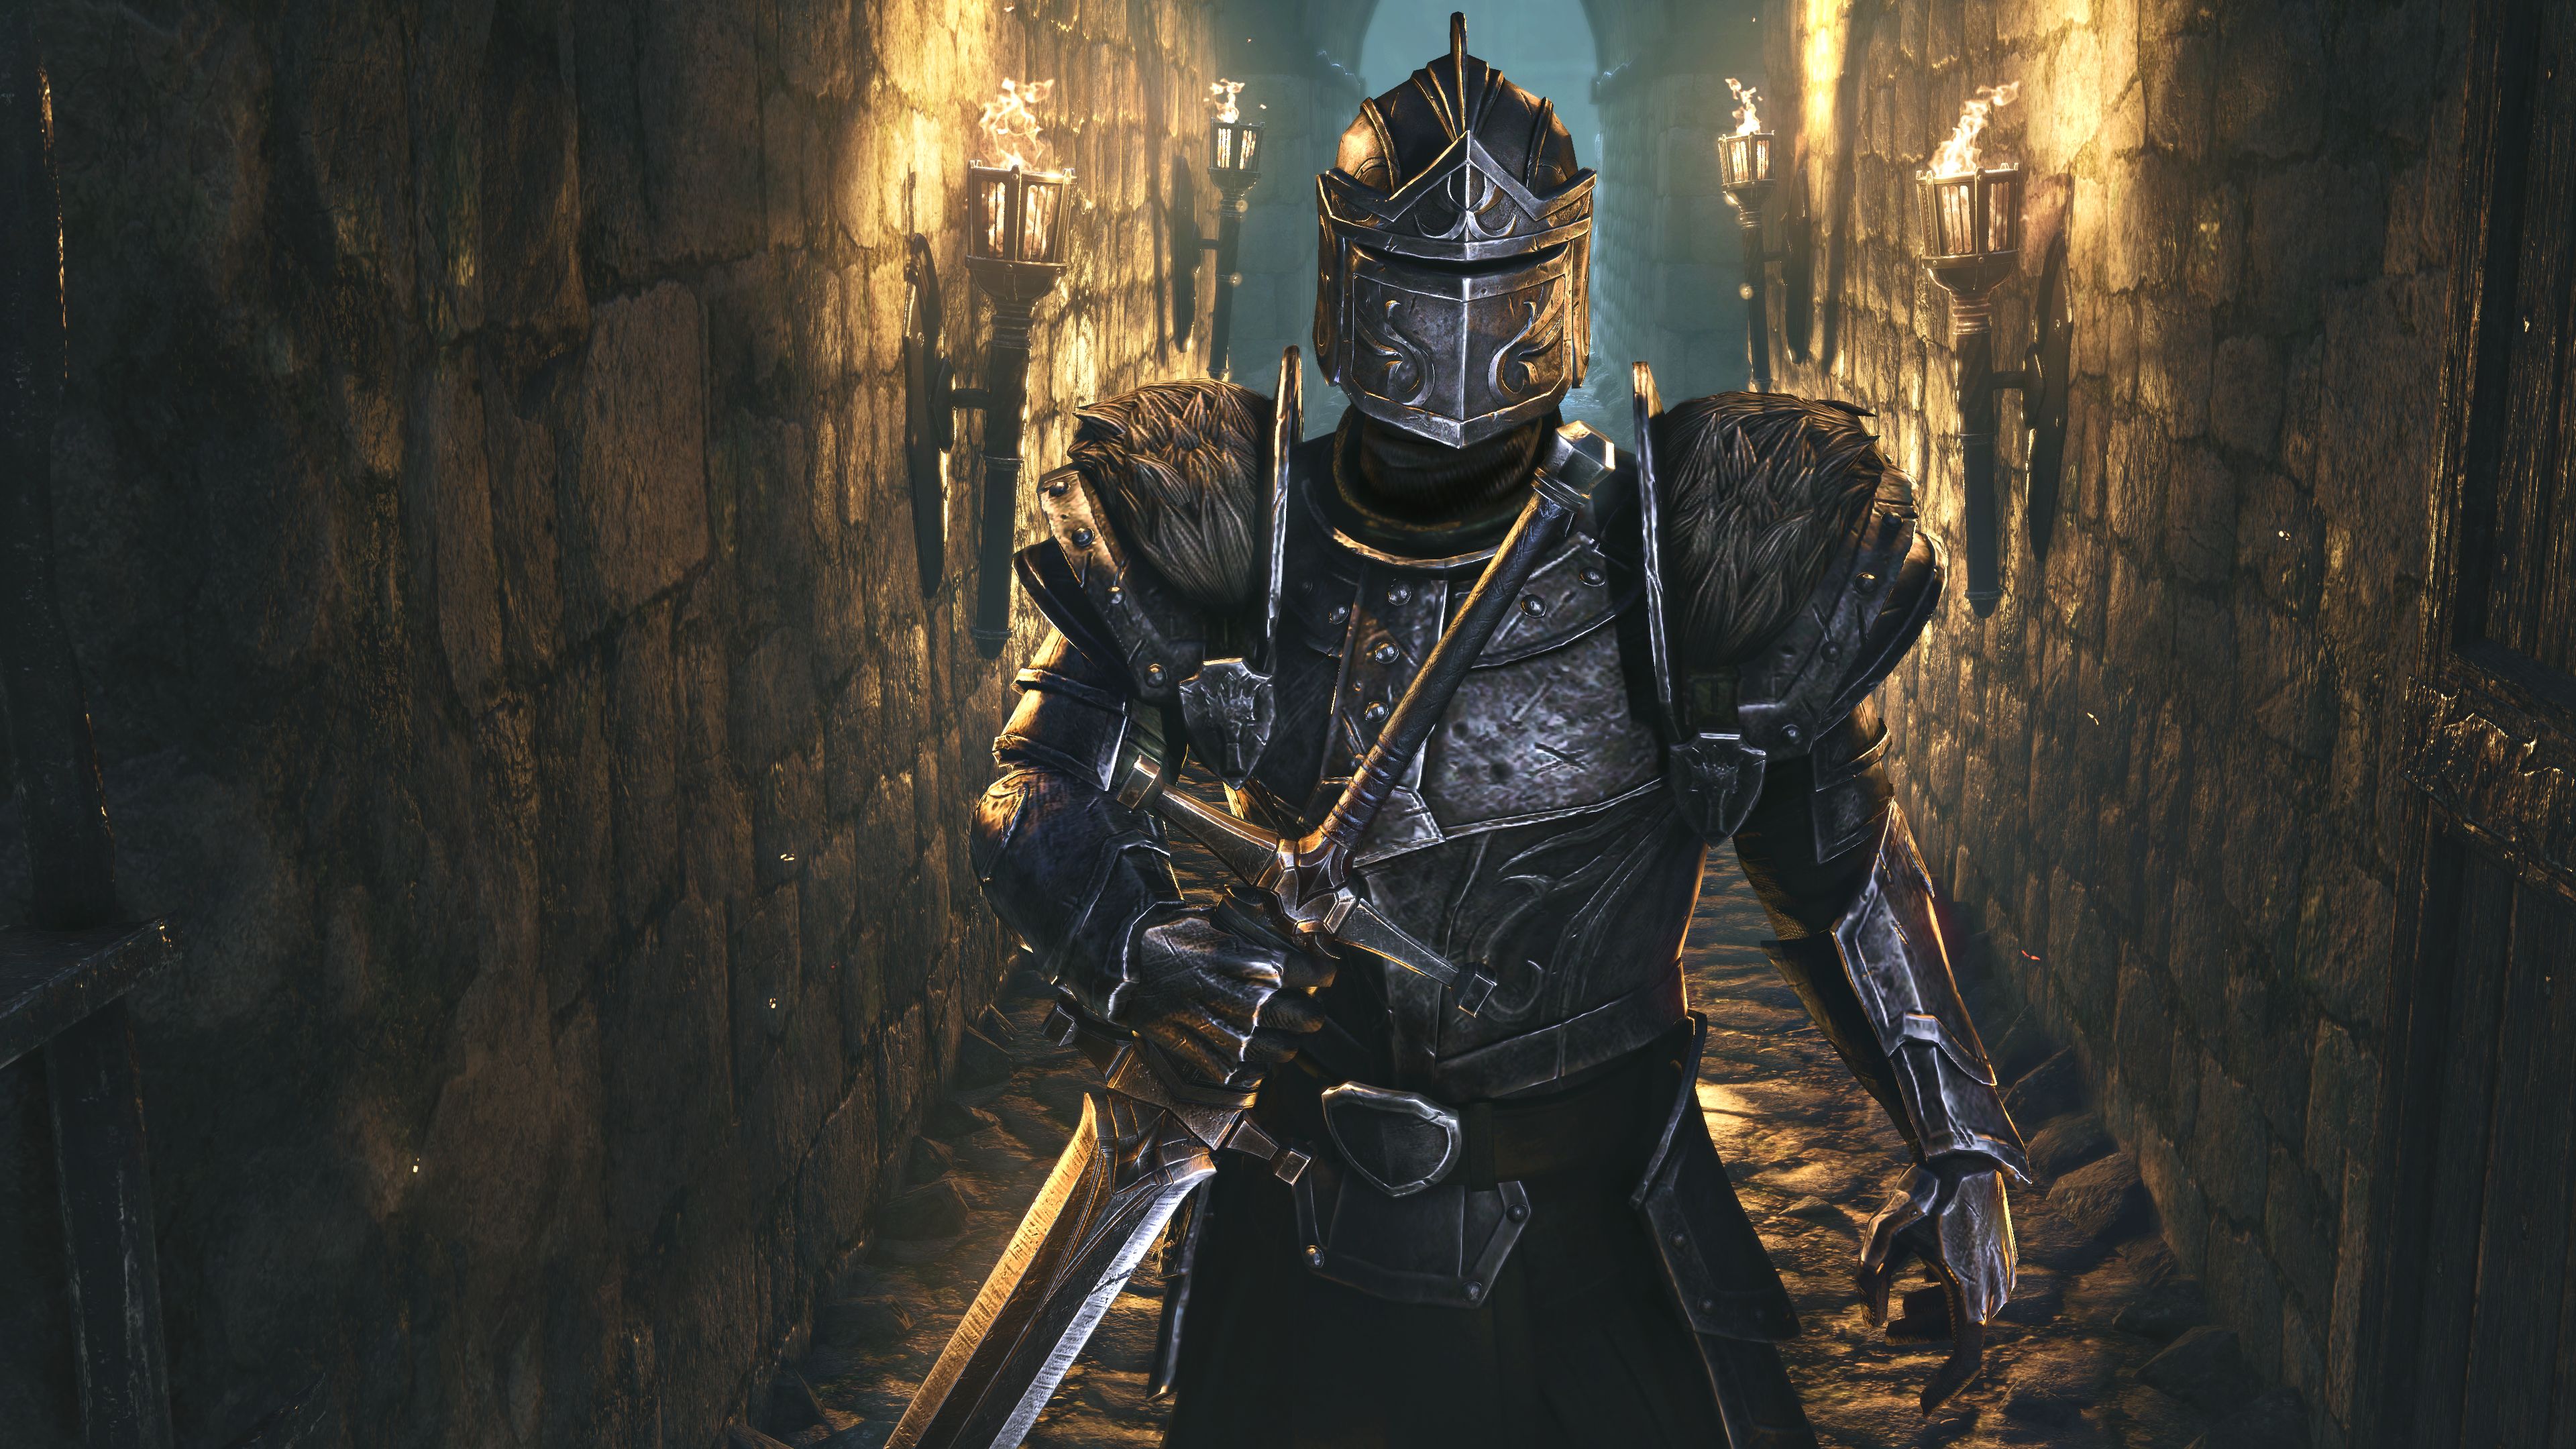 Bethesda Tours Upcoming DLC for The Elder Scrolls Online: Tamriel Unlimited